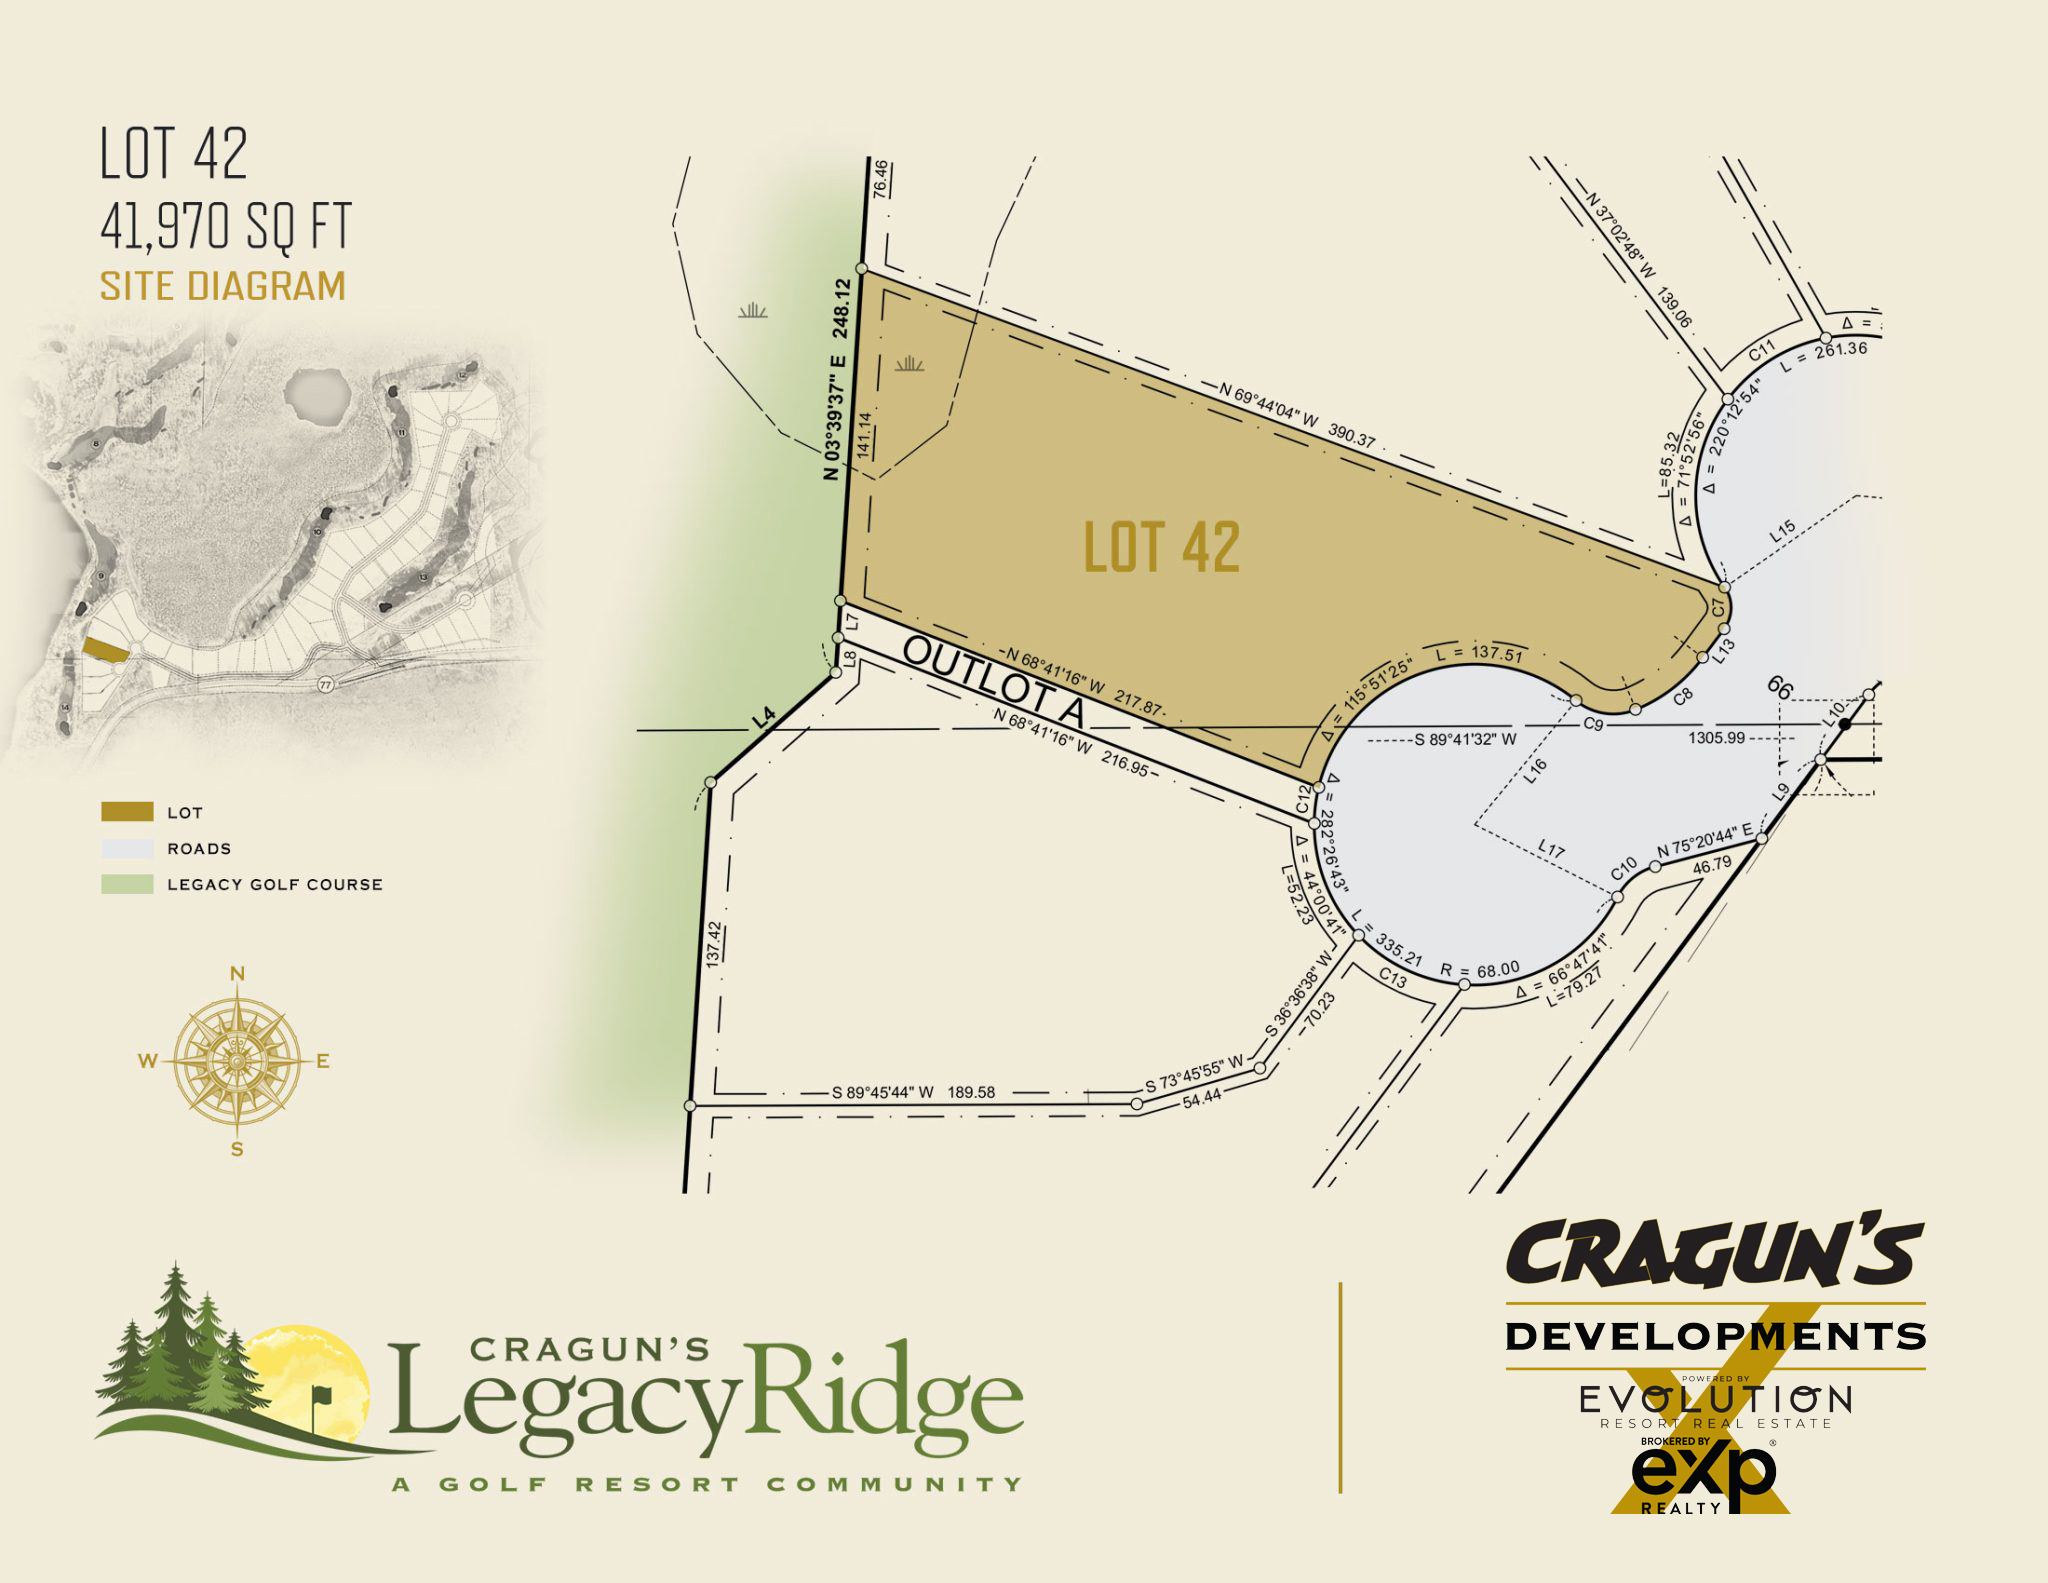 Legacy Ridge Lot 42 at Cragun's Developments in Brainerd, MN